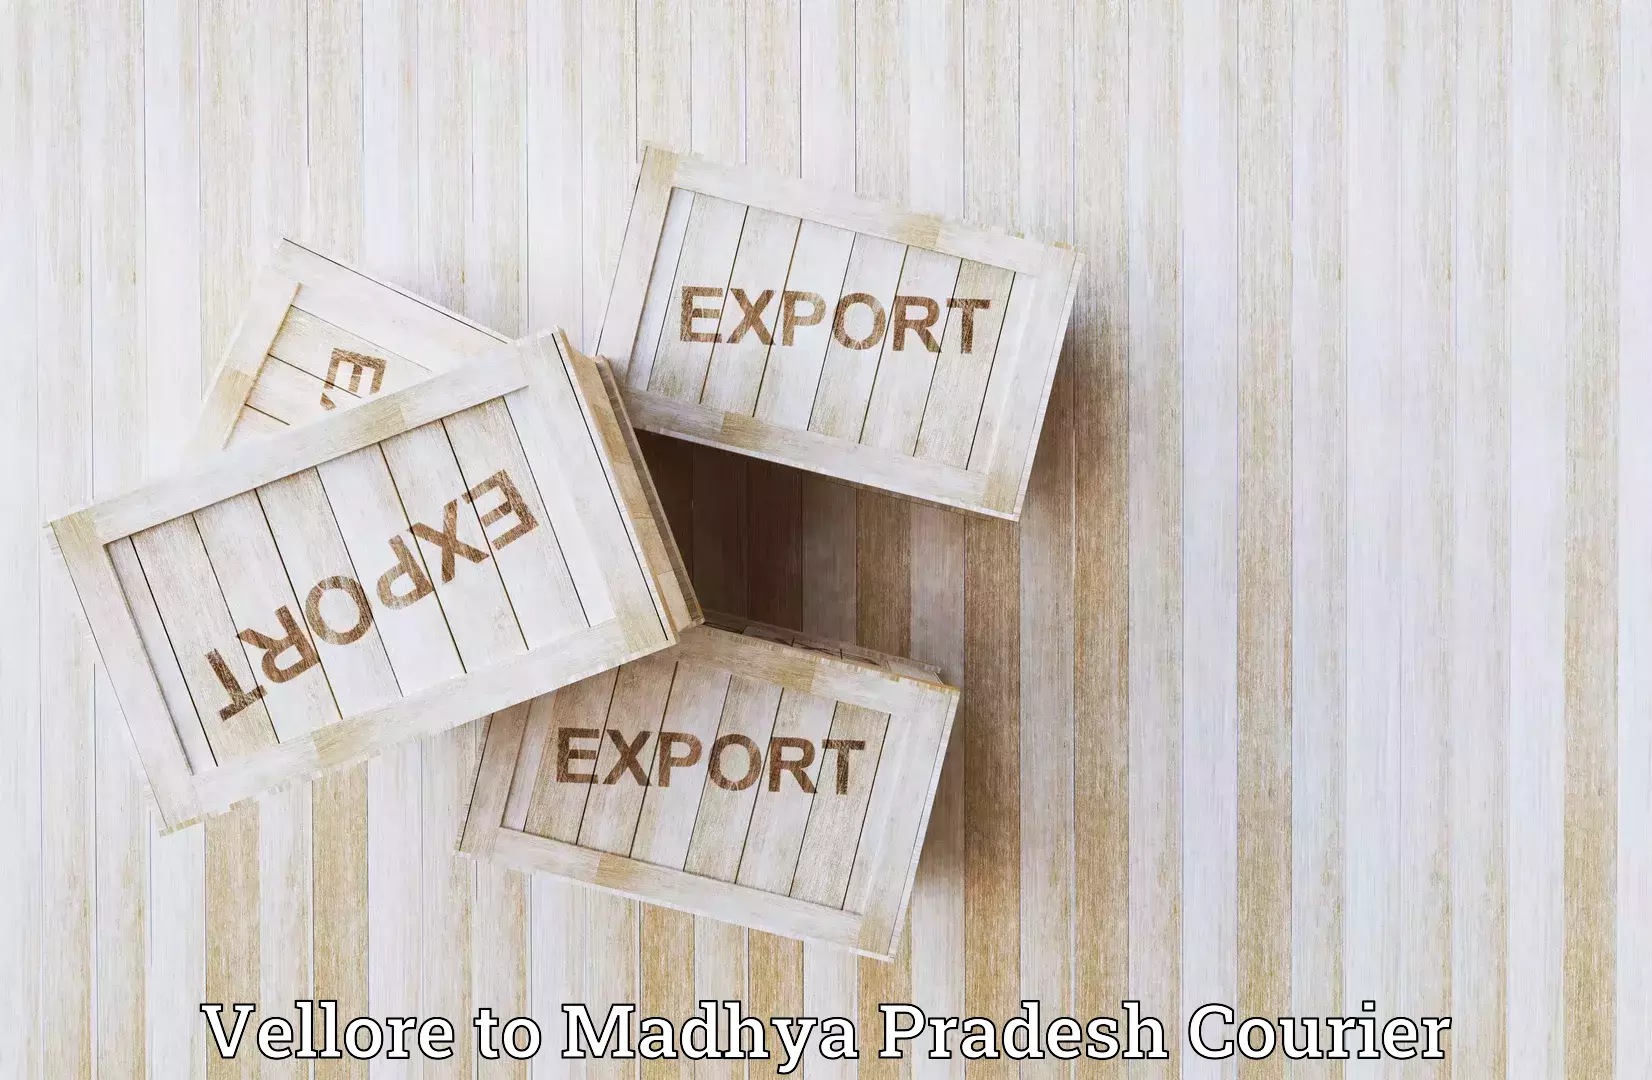 Courier service innovation Vellore to Madhya Pradesh